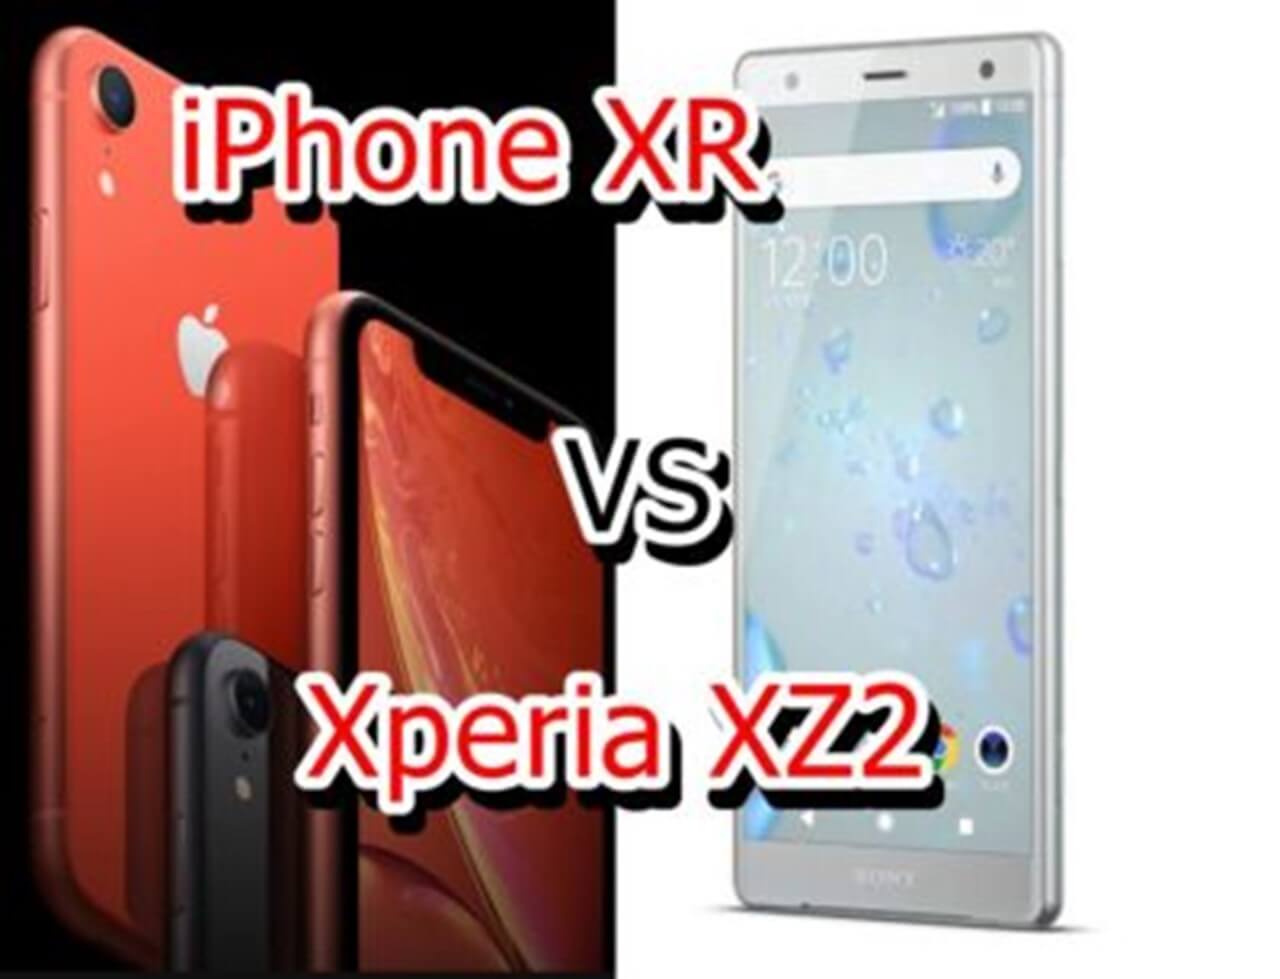 iphone xr vs xperia xz2